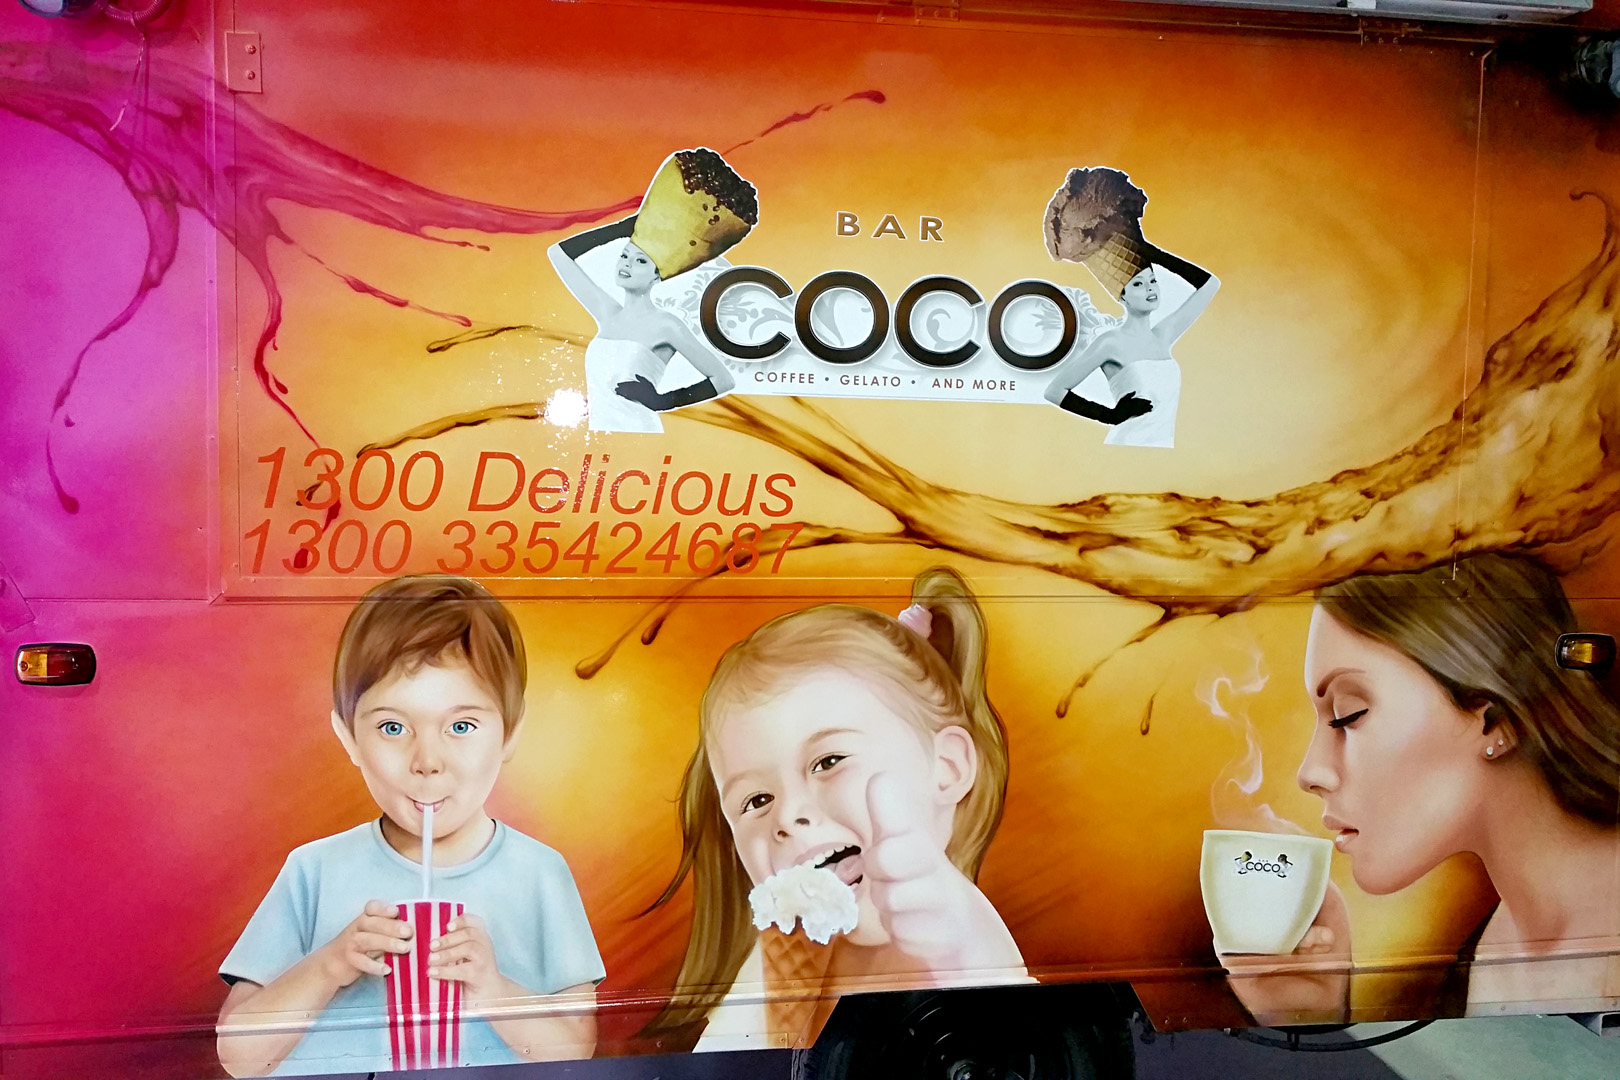 ICE CREAM & COFFEE trailer - BAR COCO